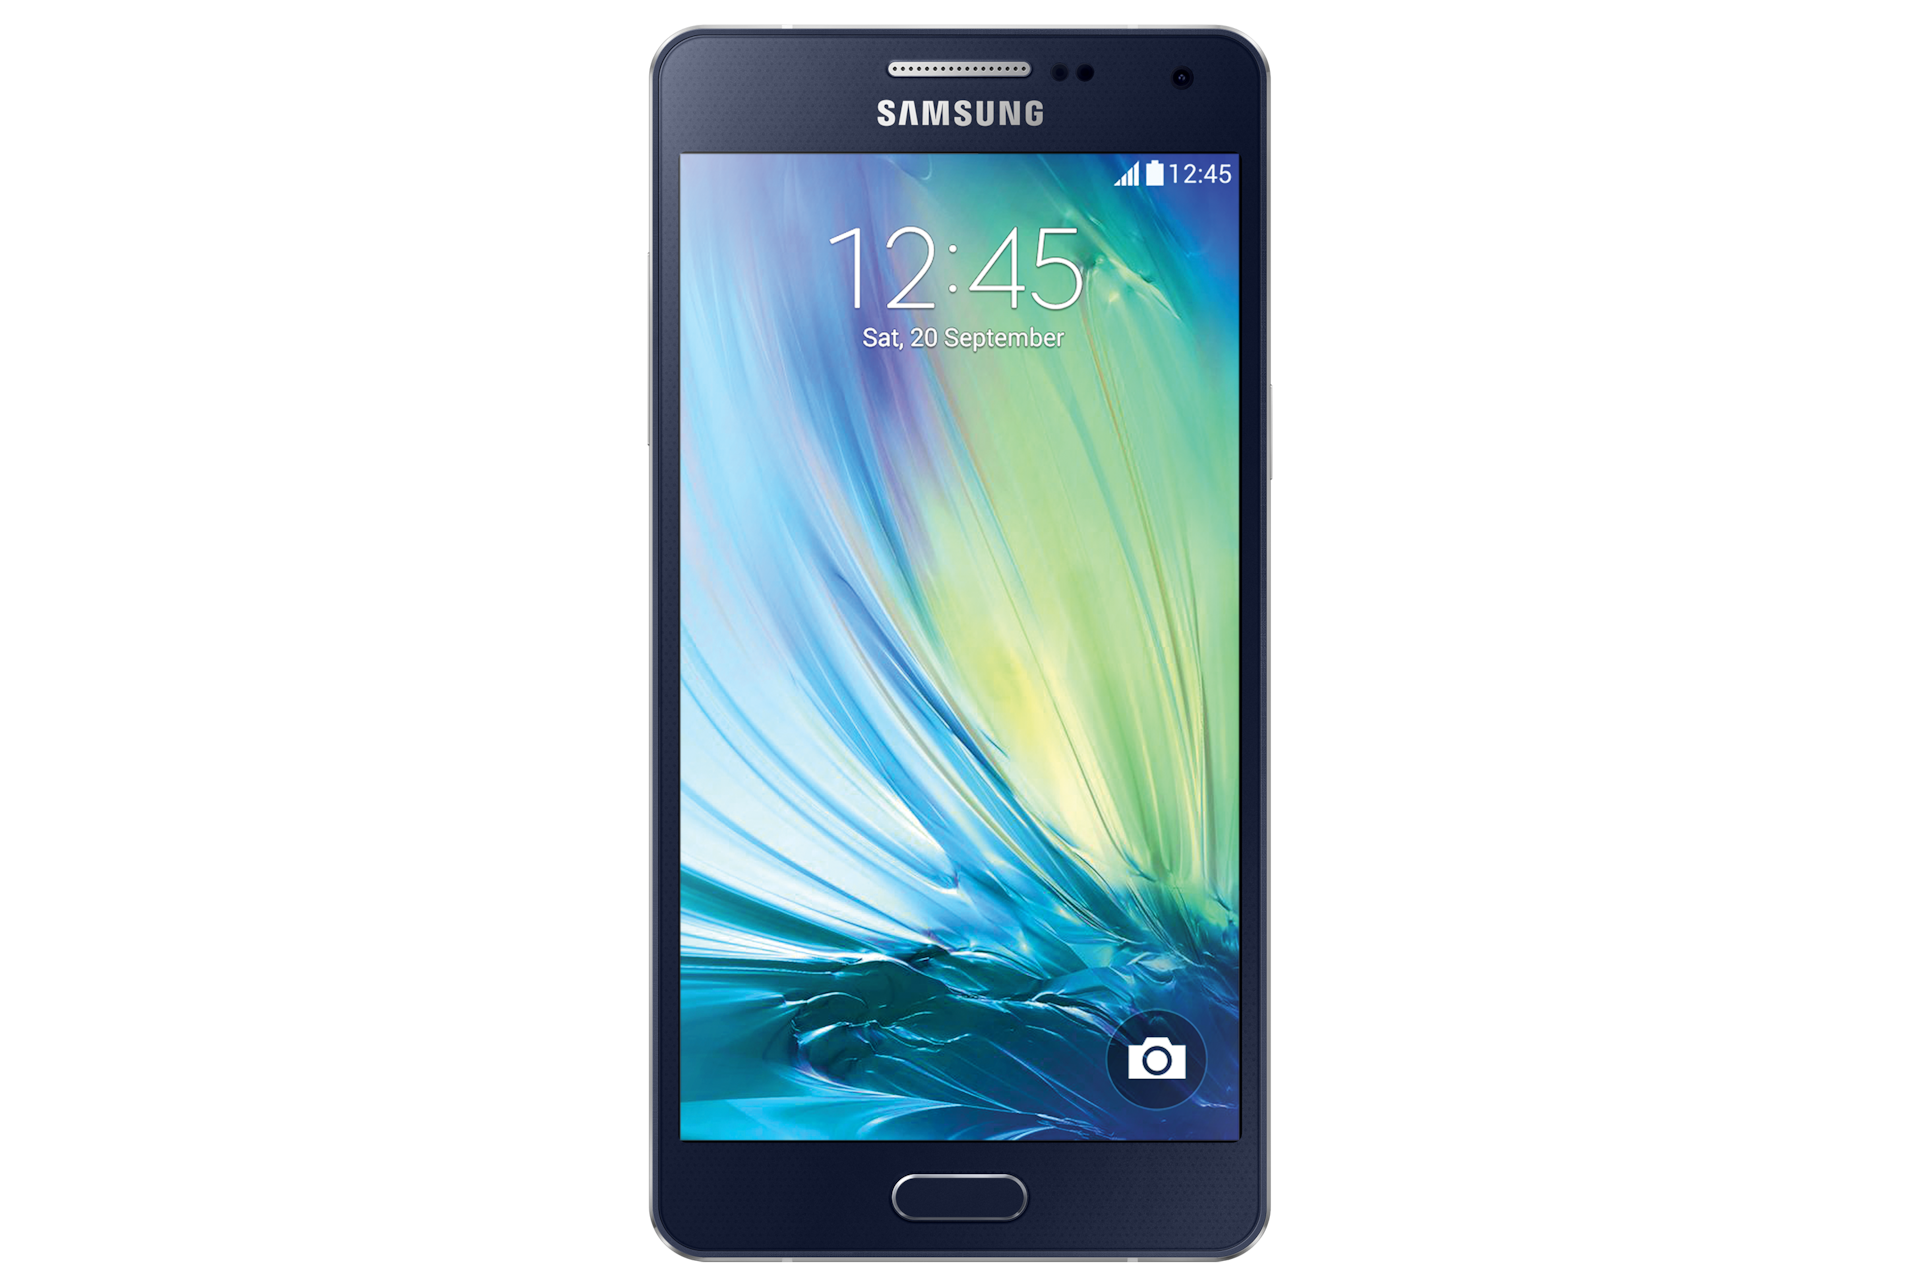 Samsung Galaxy A5 Sm A500 Samsung Be